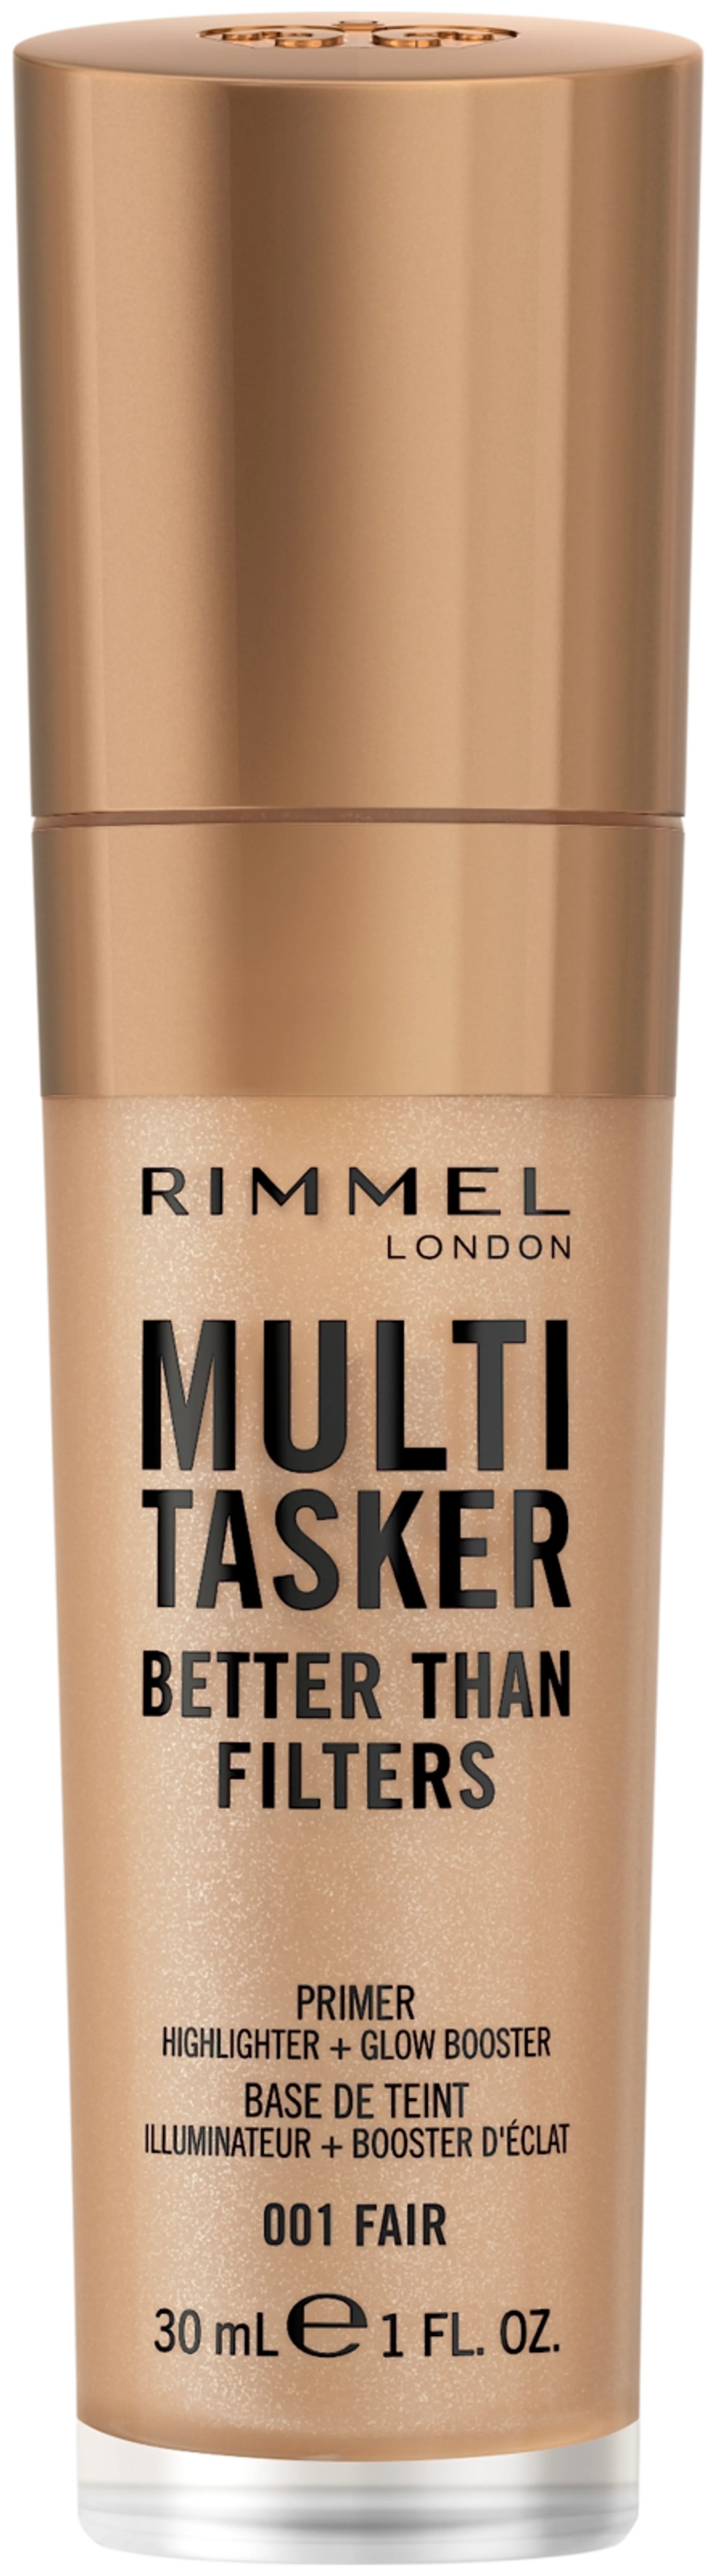 Rimmel Multi Tasker Better Than Filters 30 ml, 001 Fair meikkivoide - 001 Fair